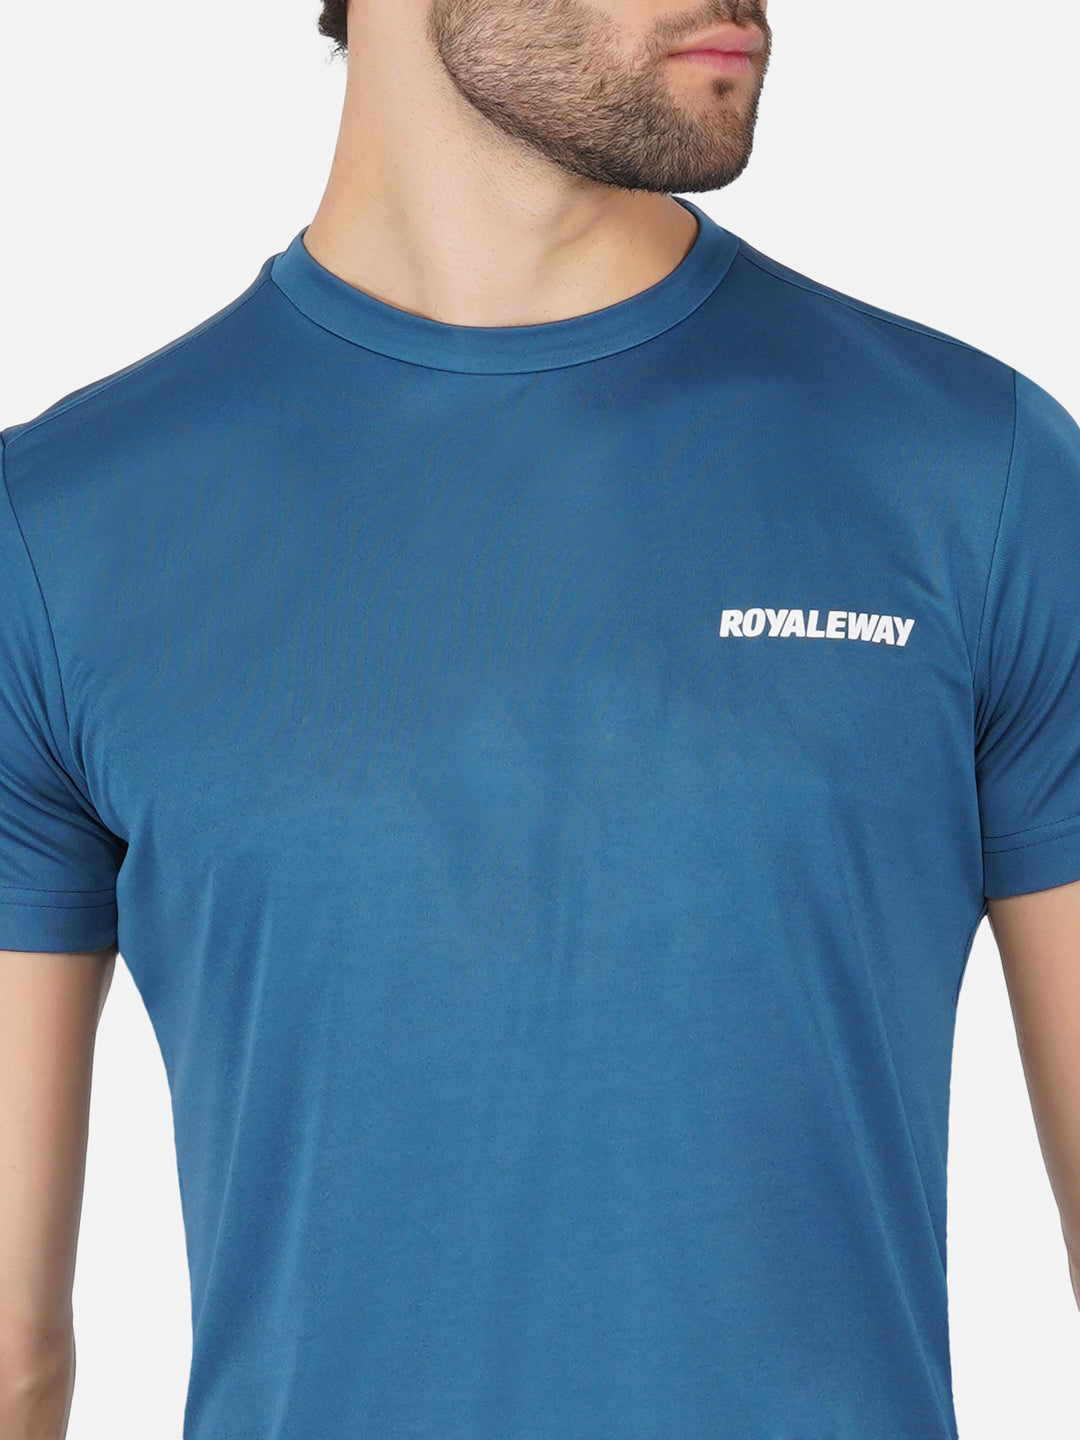 DriSOFT T Shirt Denim Blue Men RWM2016